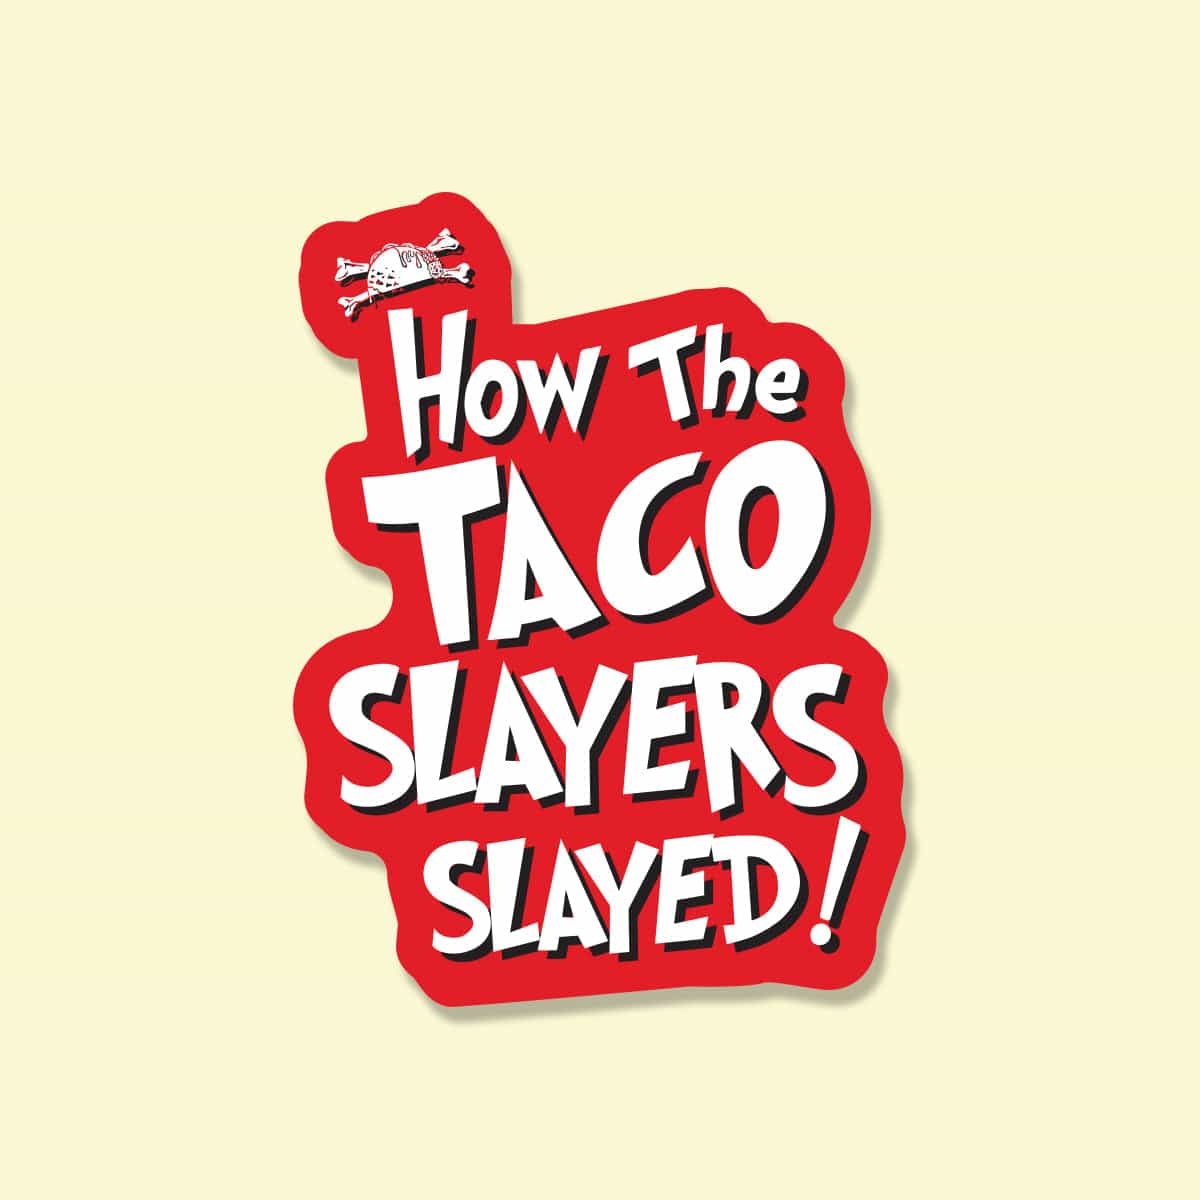 How the Taco Slayers Slayed